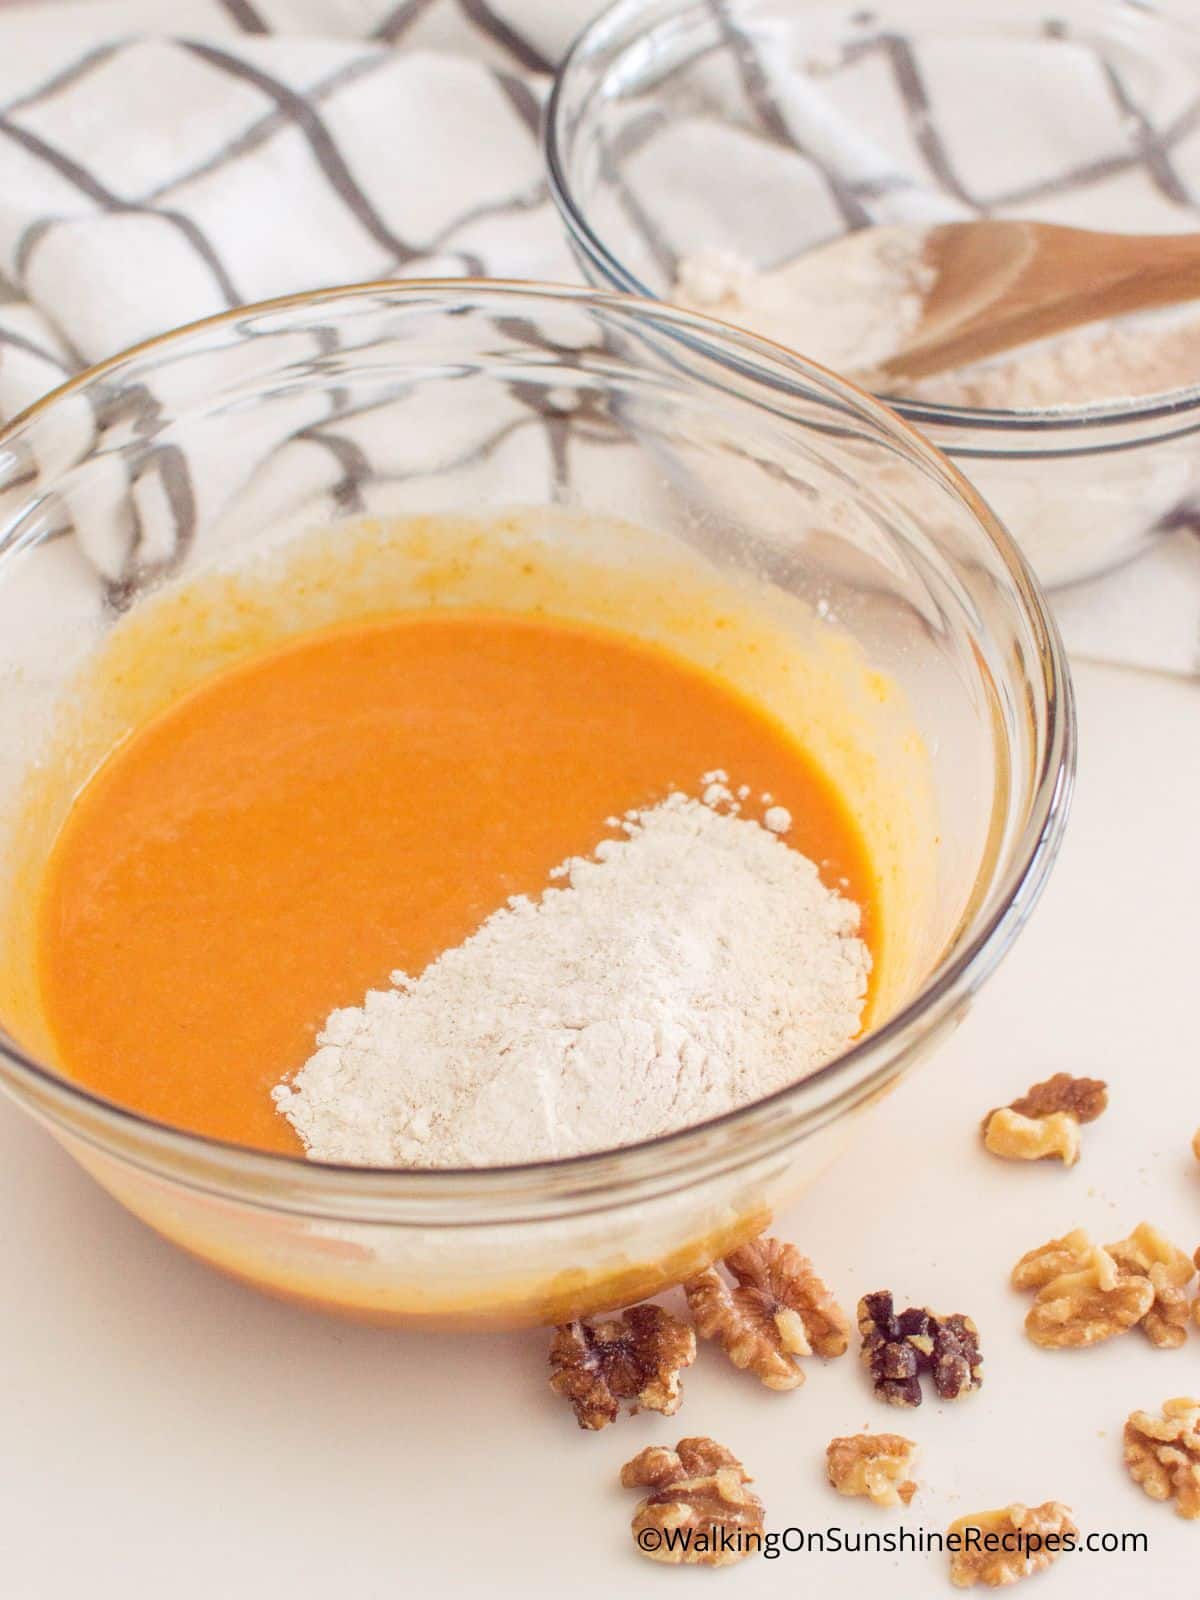 Add dry ingredients to pumpkin mixture.